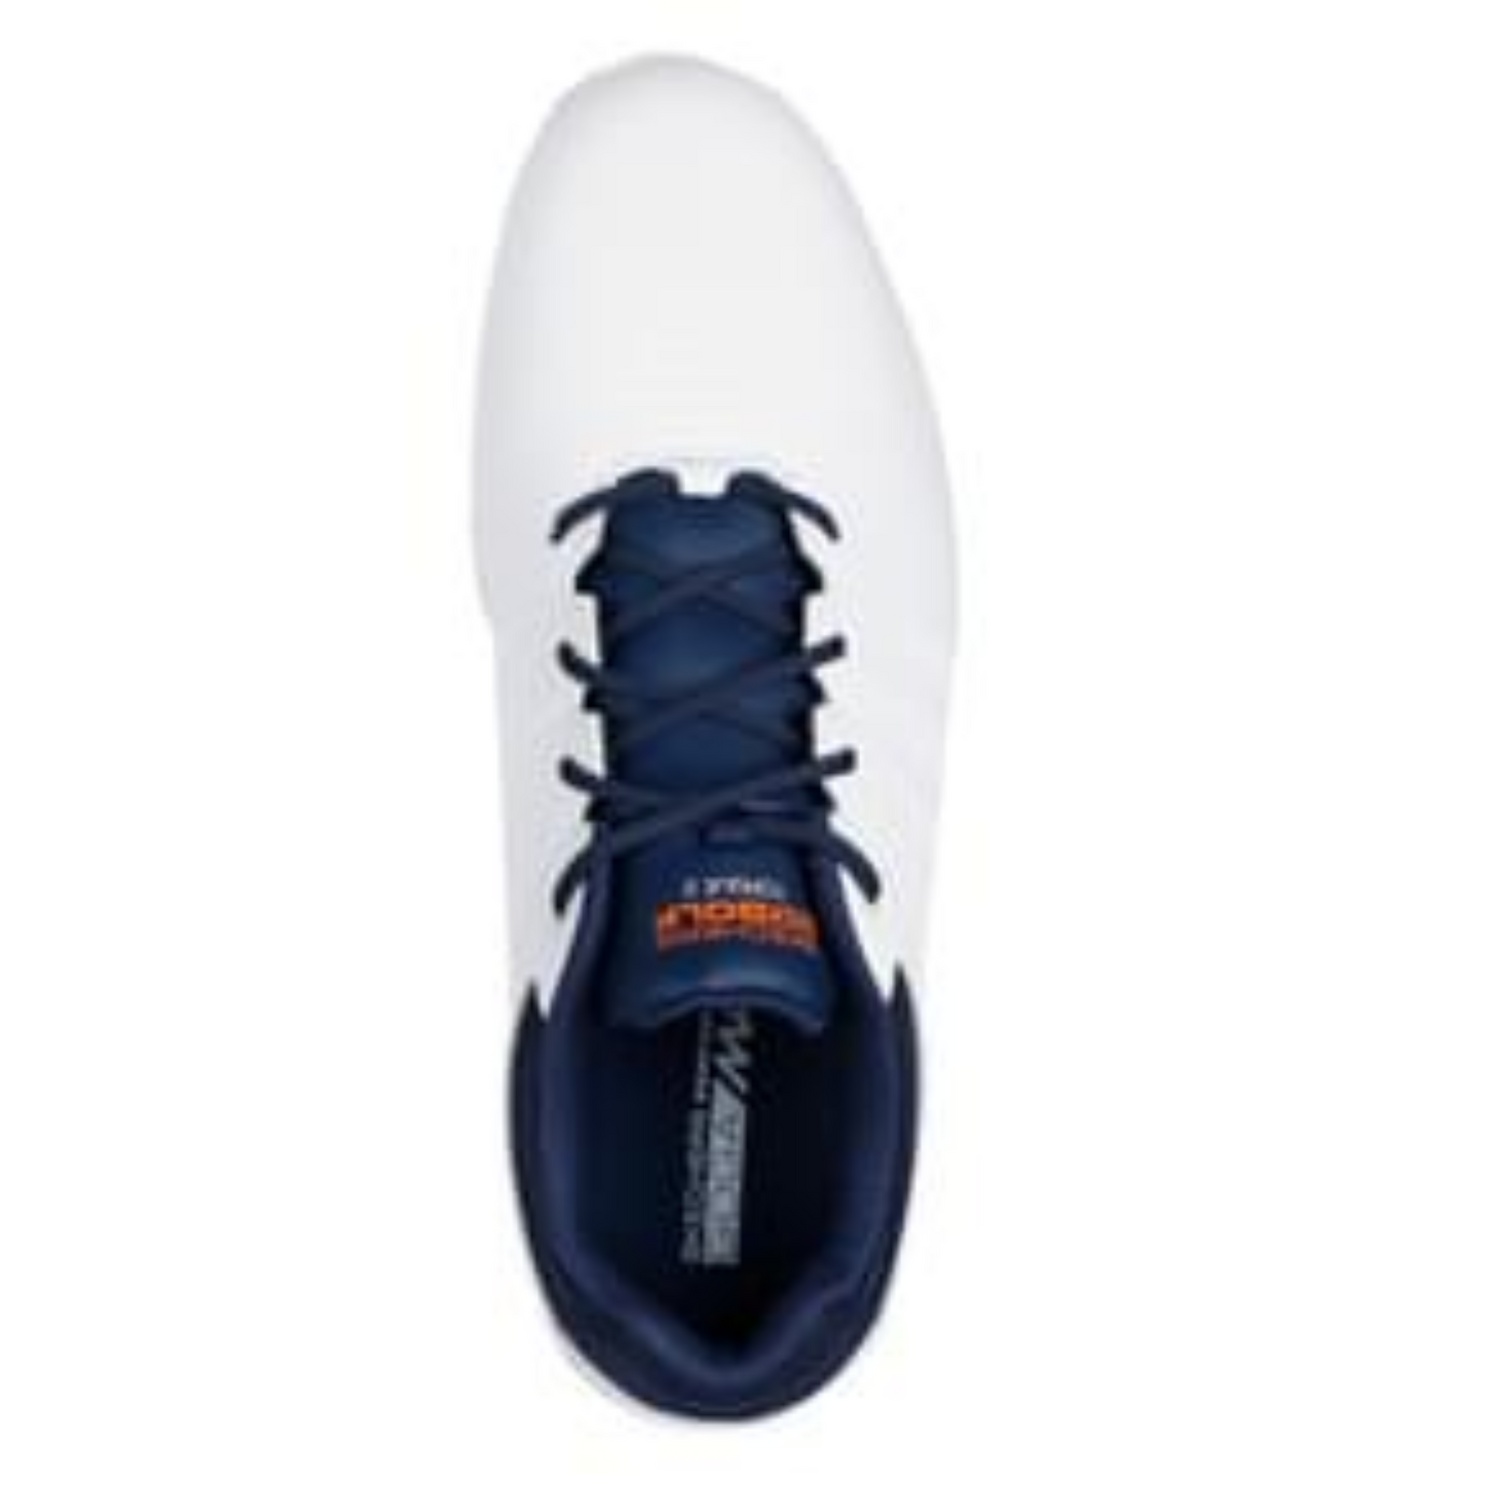 Skechers Go Golf Torque 2 Spiked Golf Shoes 214027 - White Orange   